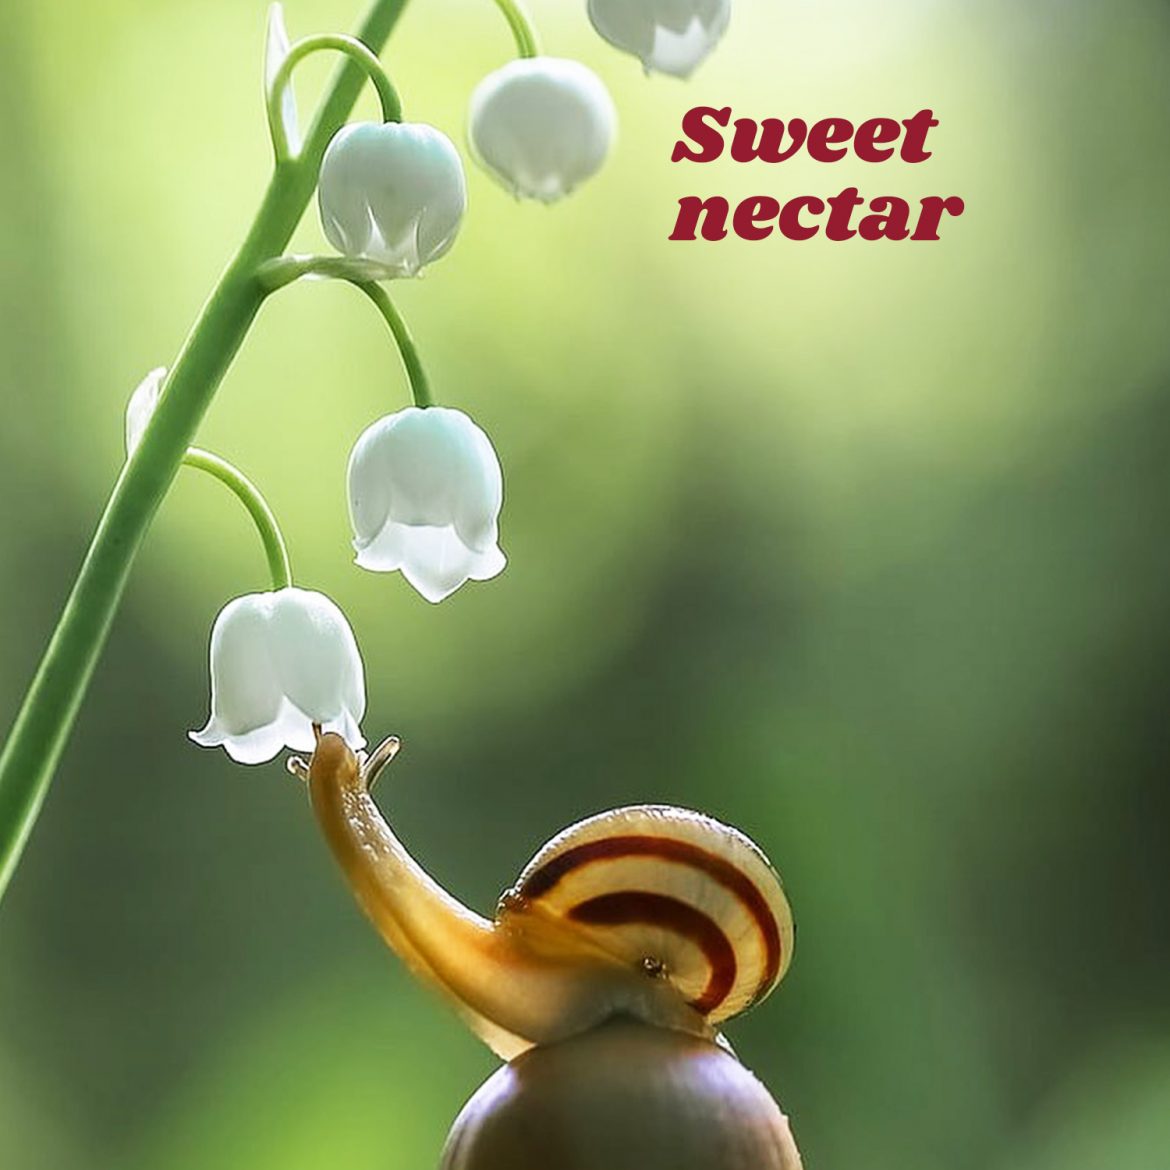 Sweet nectar